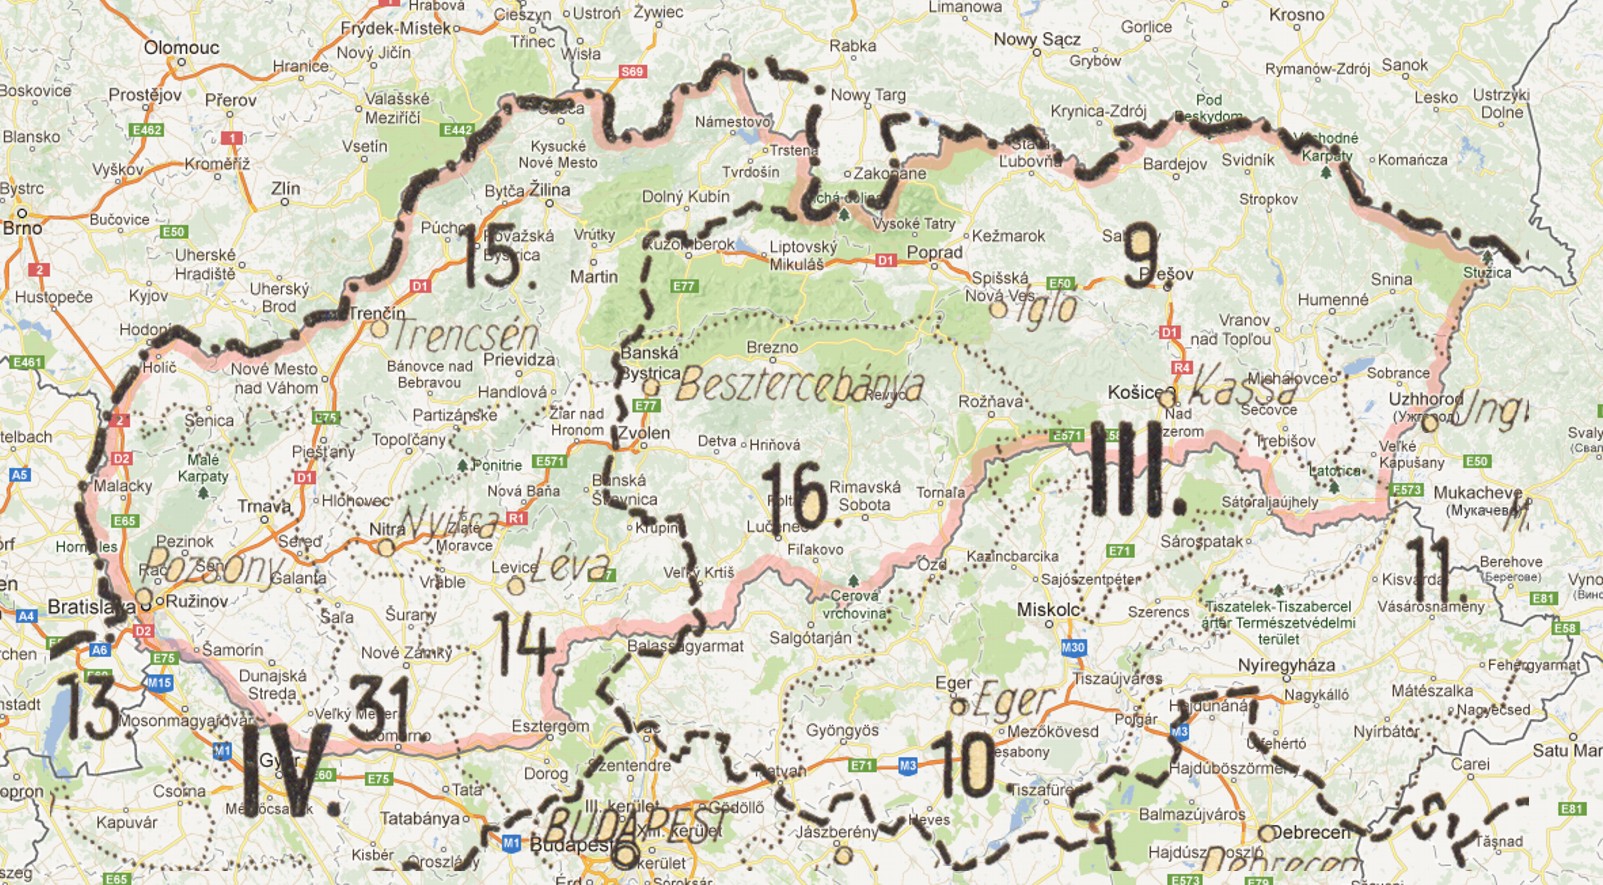 Priehľadná mapa vojenských doplňovacích obvodov uhorského honvédstva (0,47 M<img class='smiley' style='width:20px;height:20px;' src='images/smiley/cool.svg' alt='Cool'>